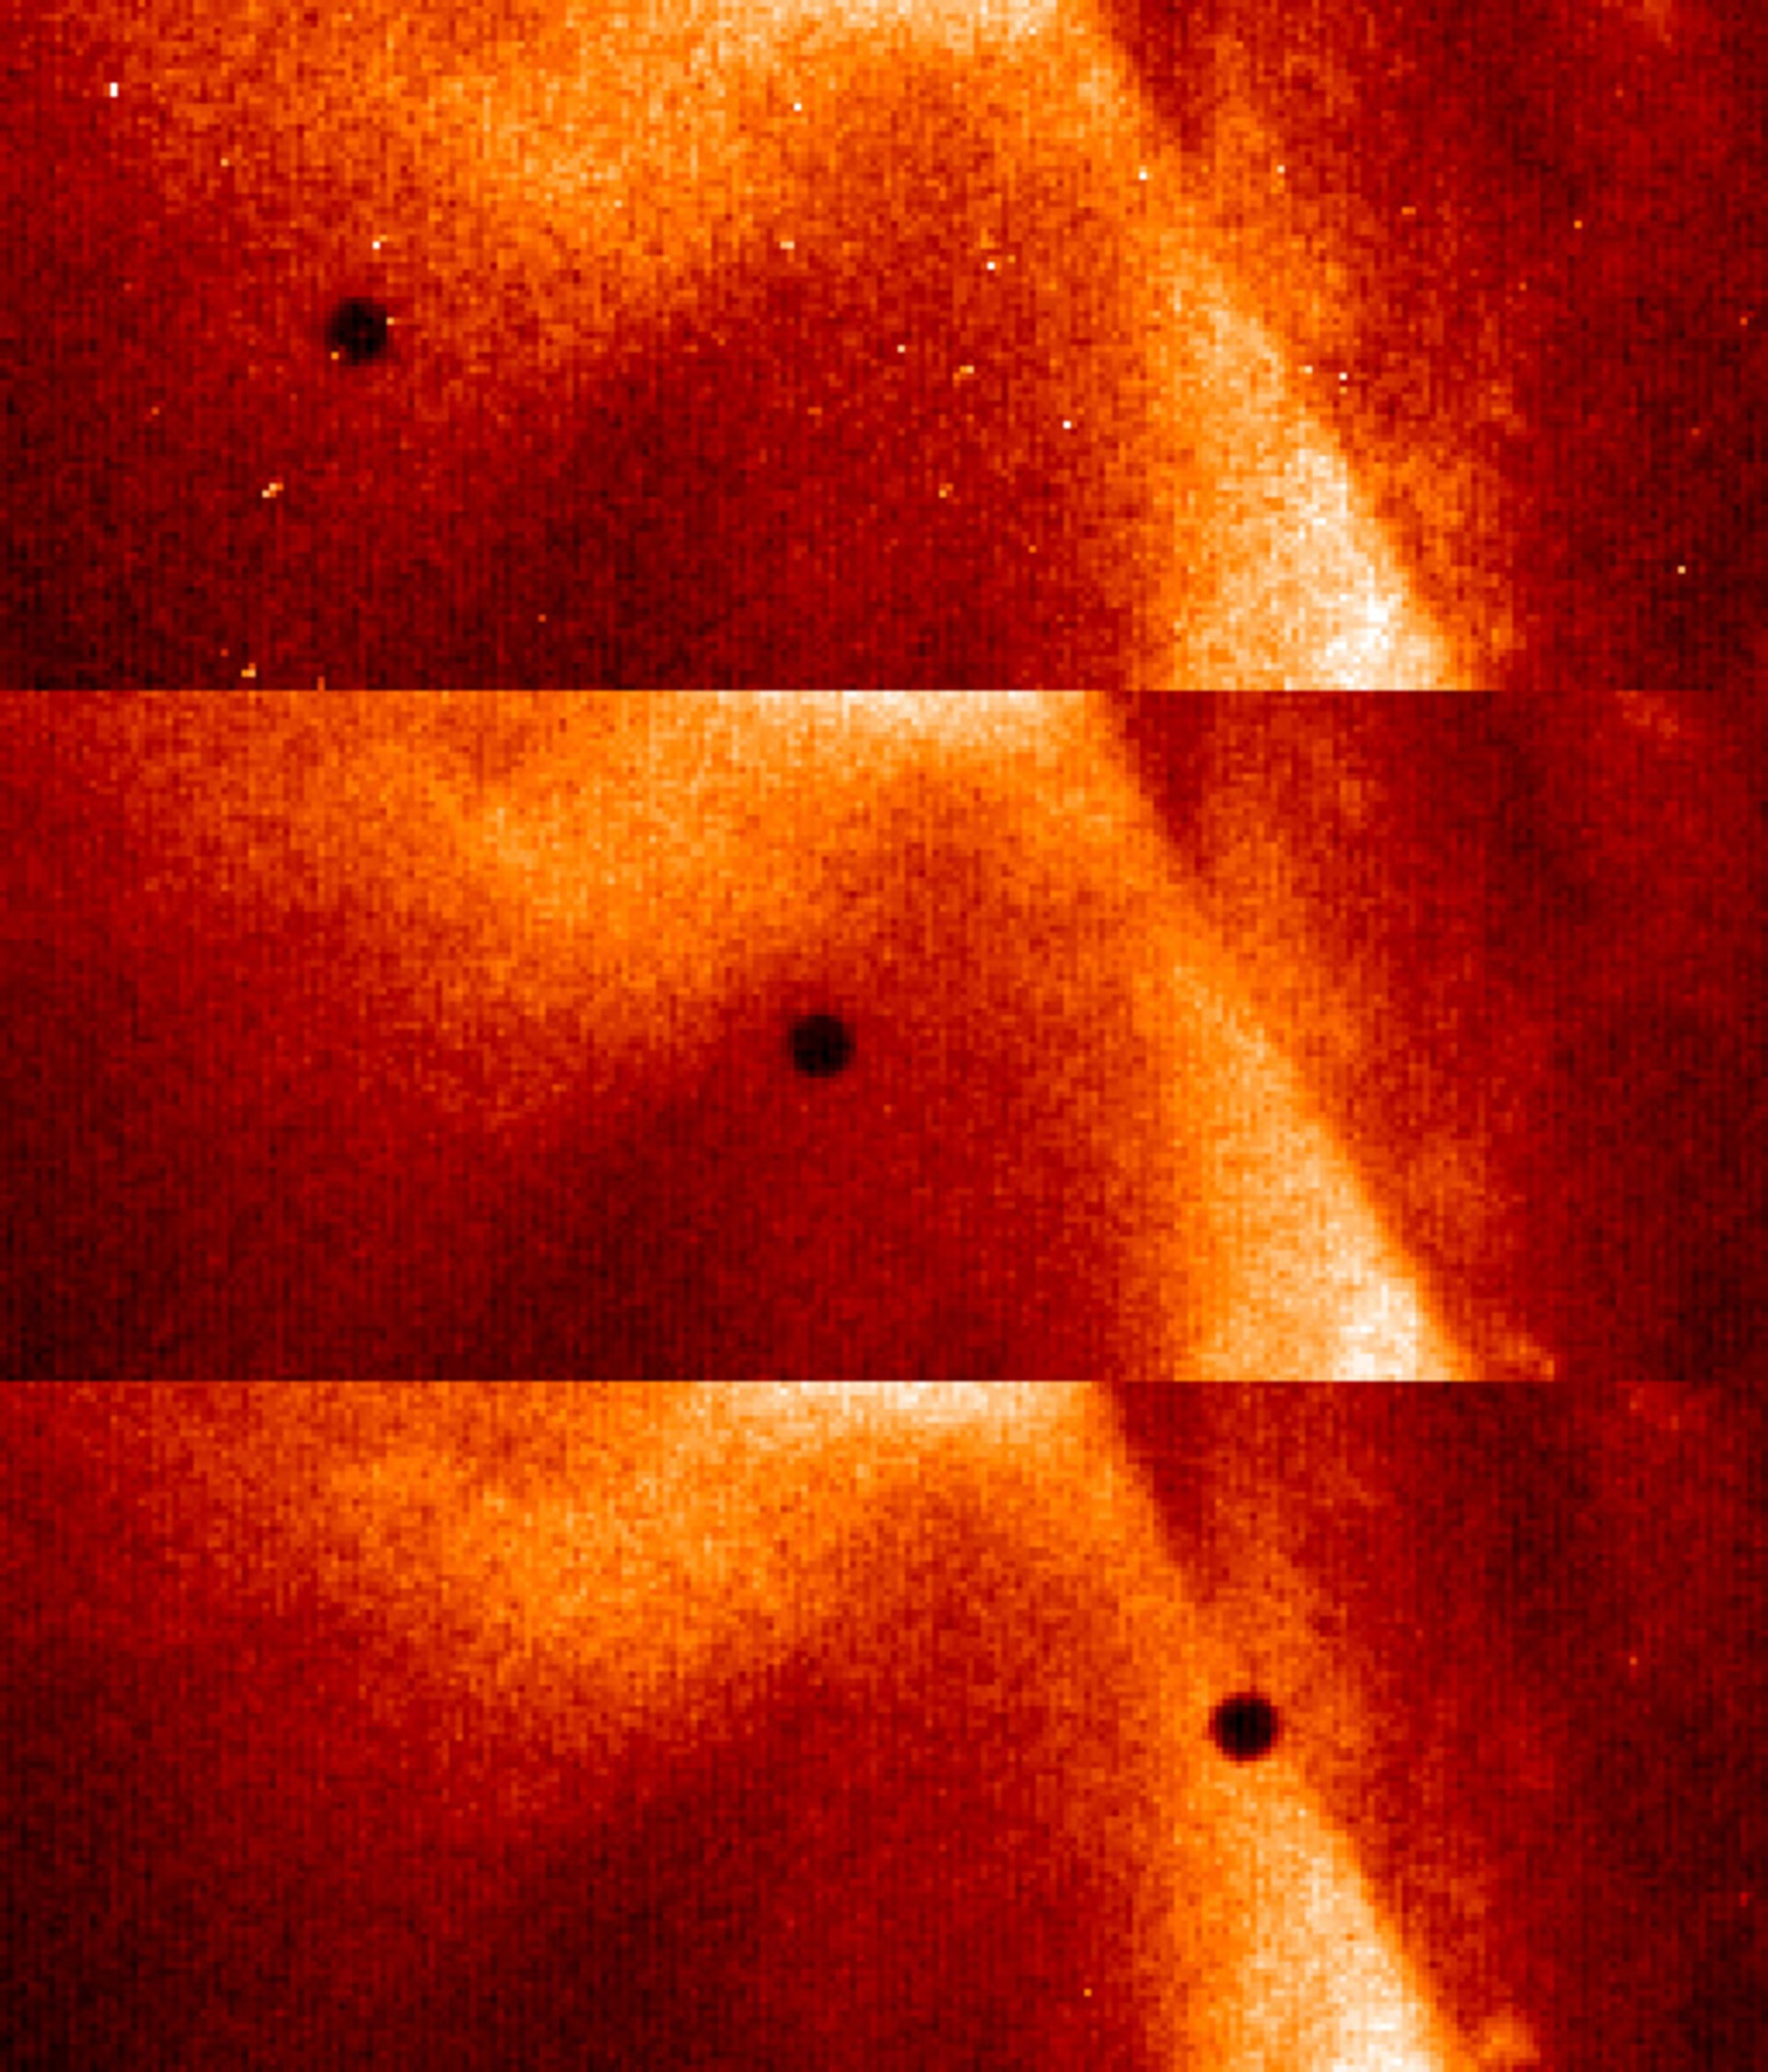 Close-ups on the 2006 Mercury transit by Hinode (Solar-B)